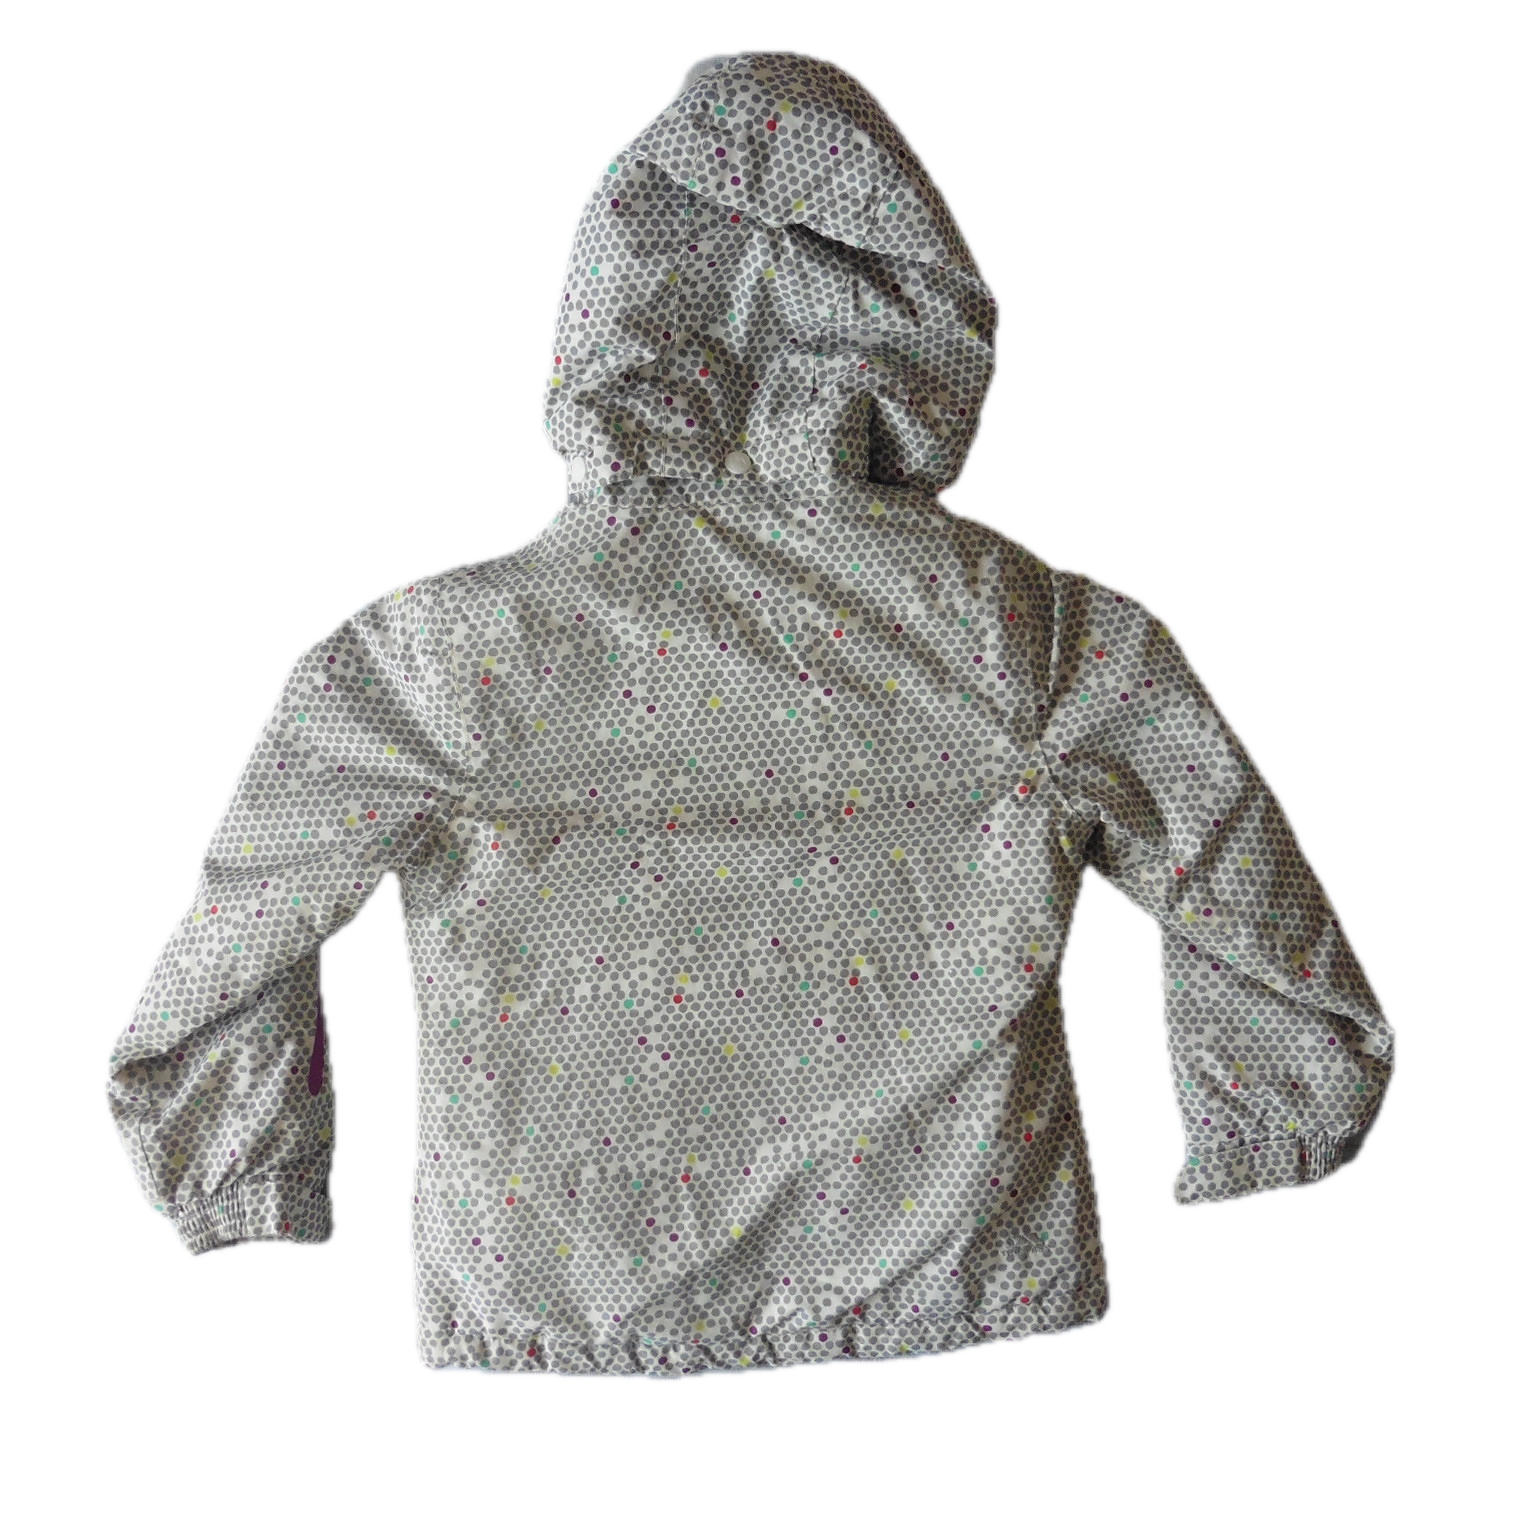 Preloved Tresspass Ski Coat White with Grey Dots 5-6y